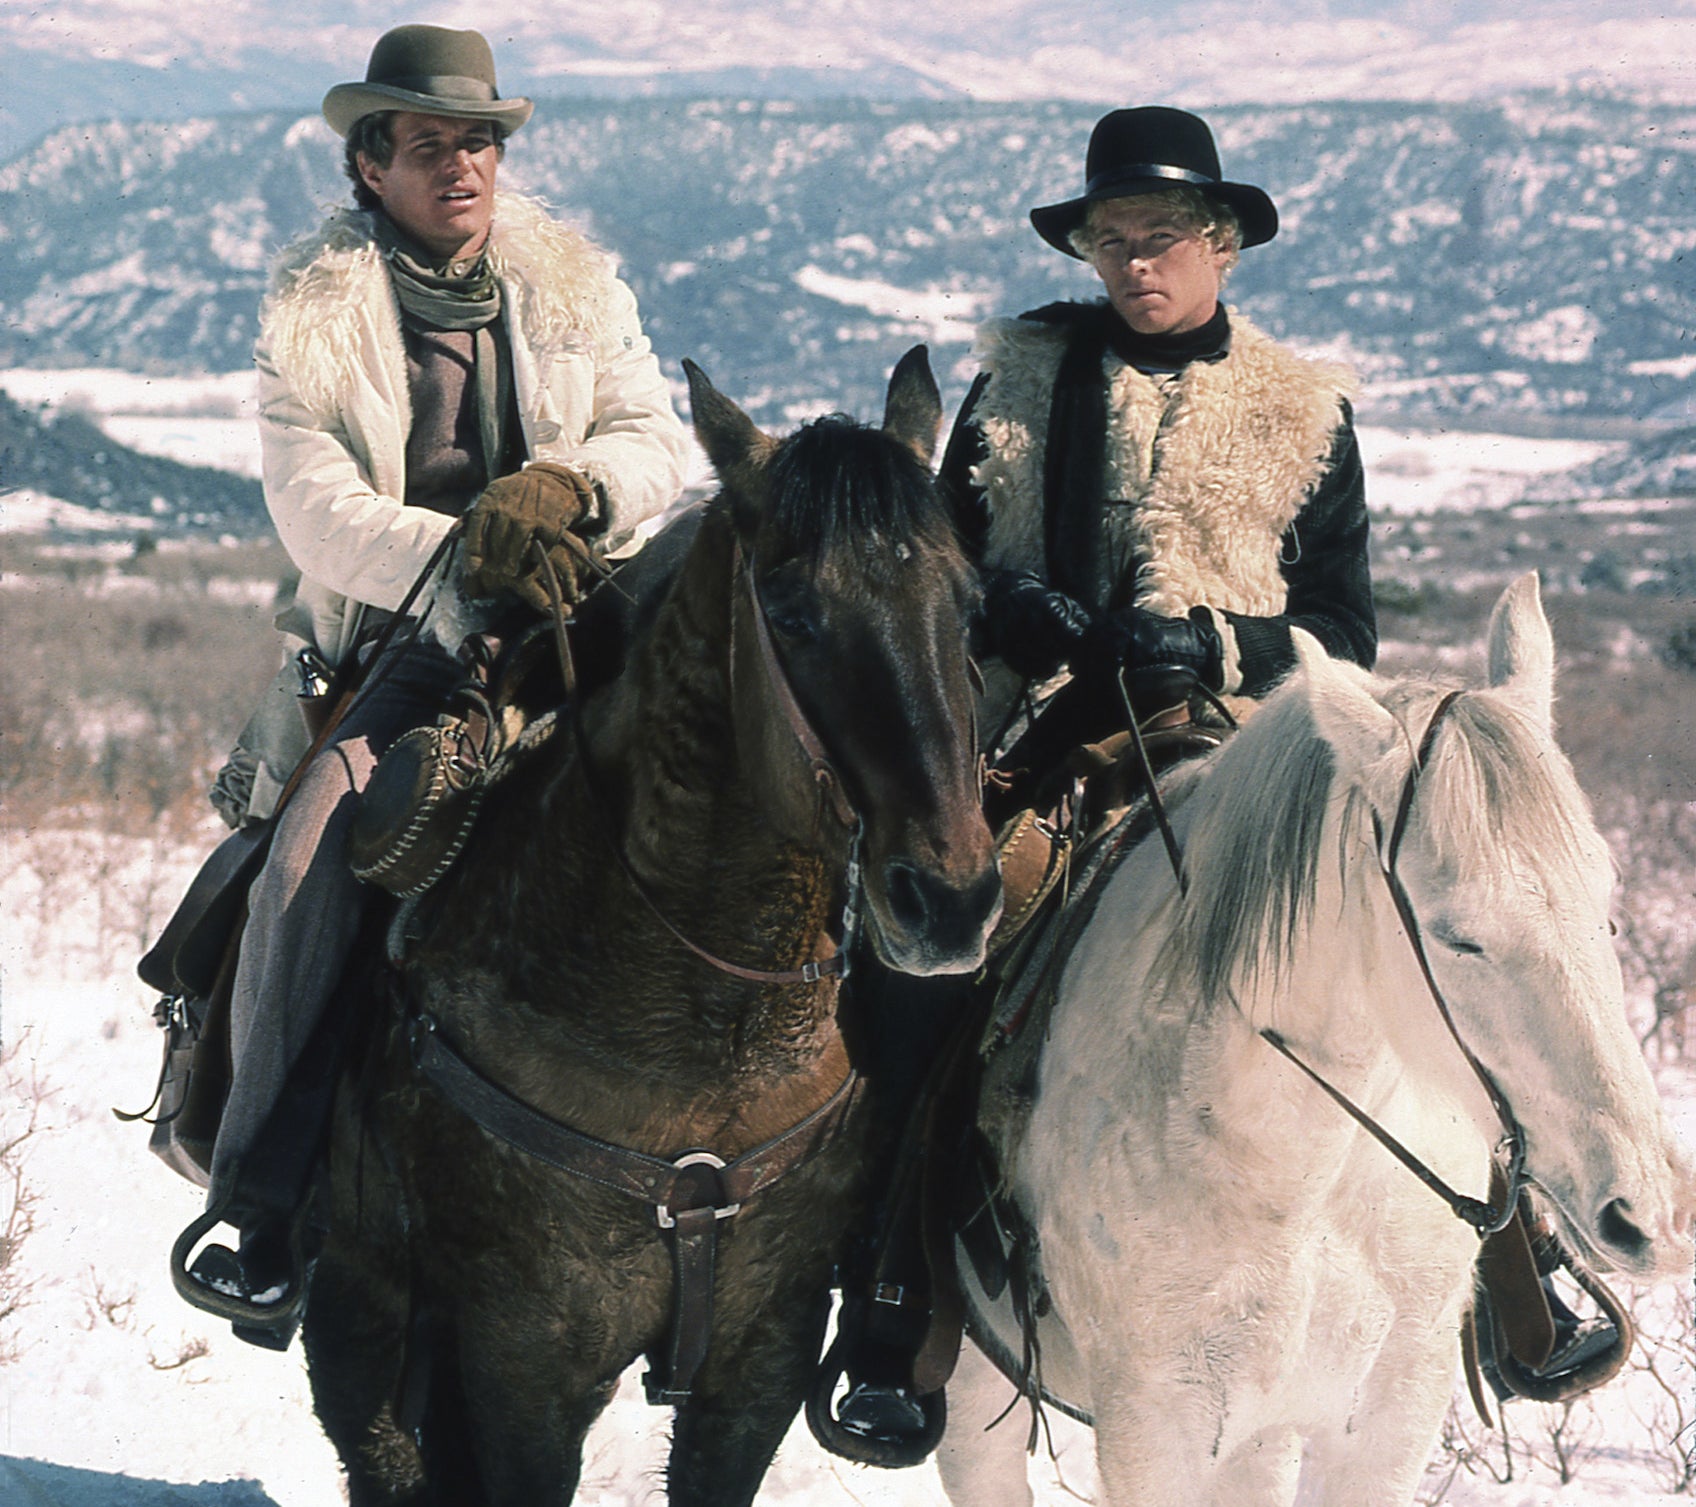 Publicity image of Tom Berenger and William Katt on horses